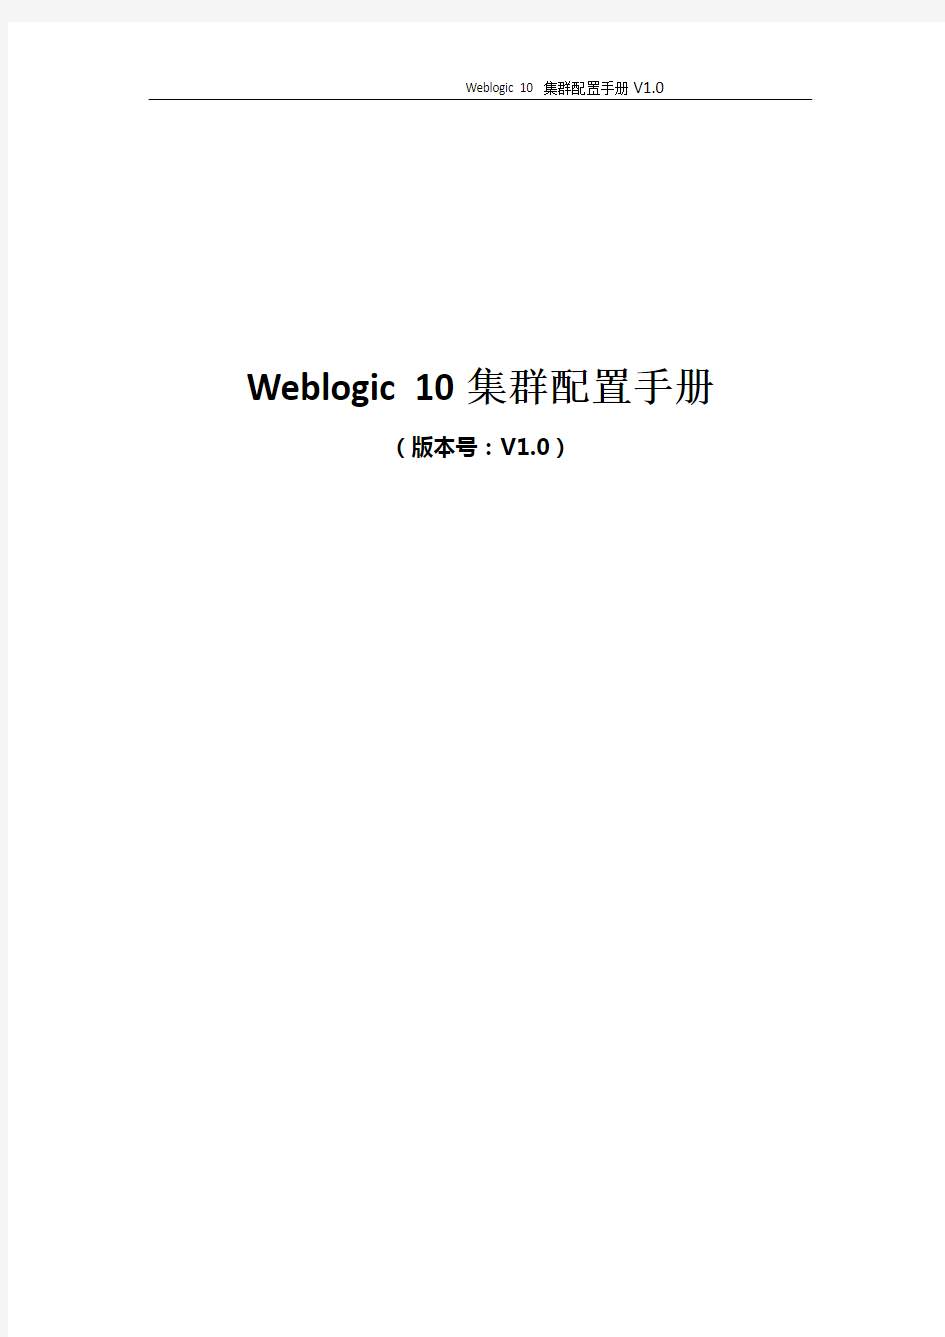 Weblogic+10+集群配置手册